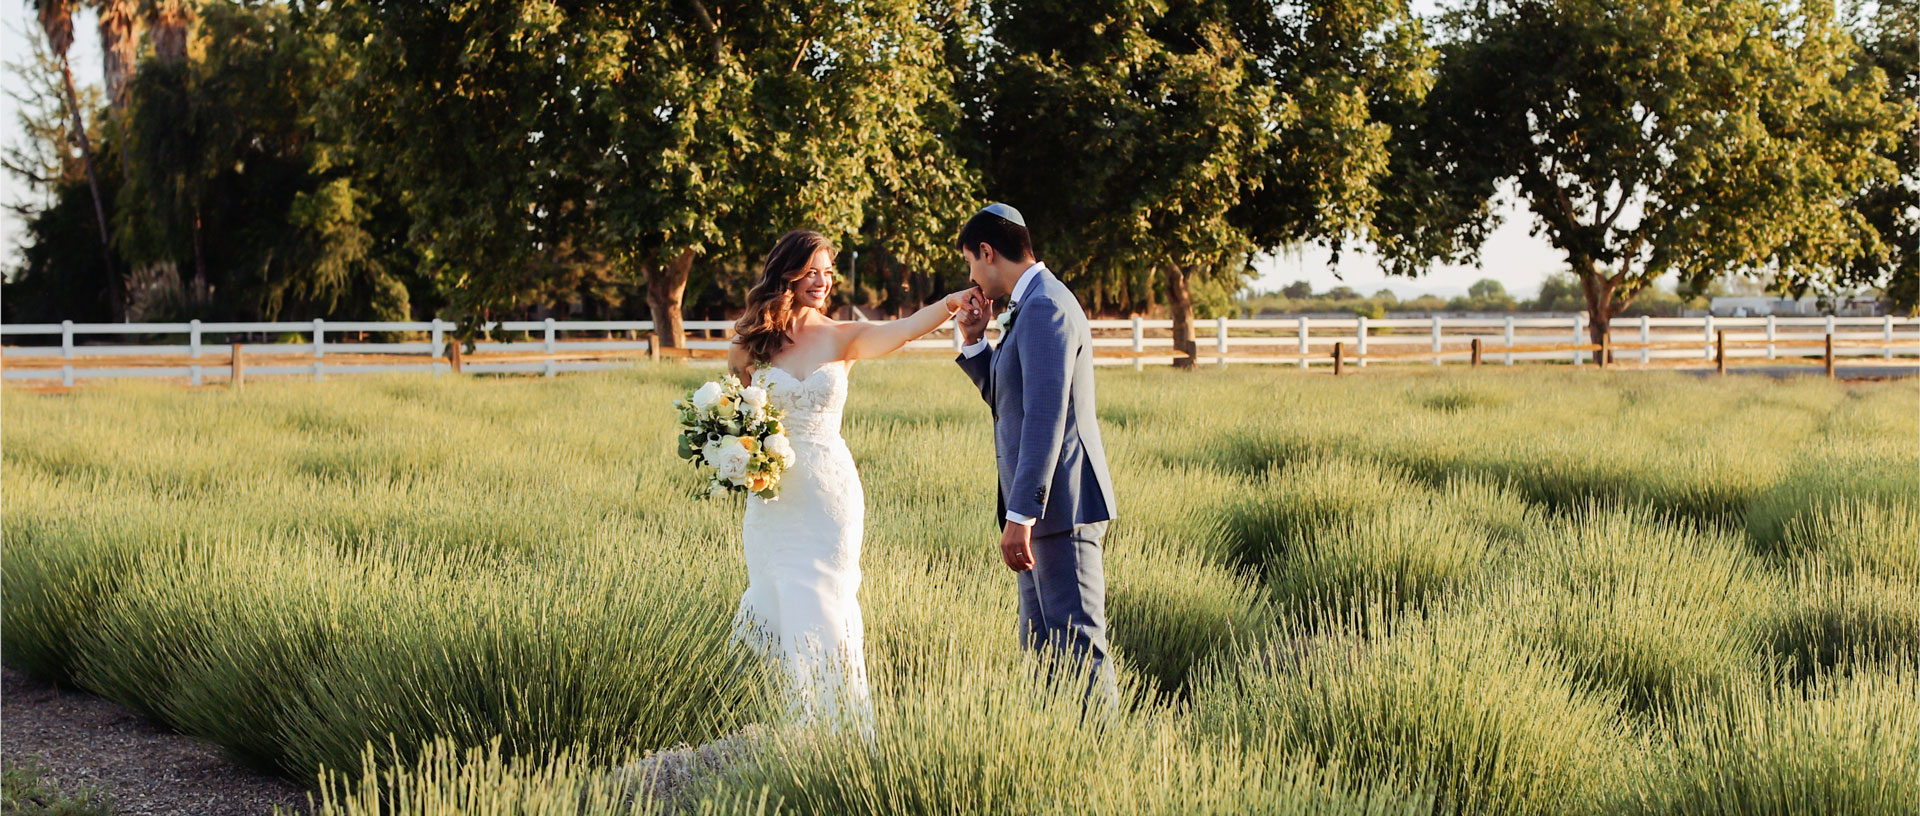 Pageo Lavender Farm Wedding in California - Nandie and Emilys - Jewish and Sikh Wedding